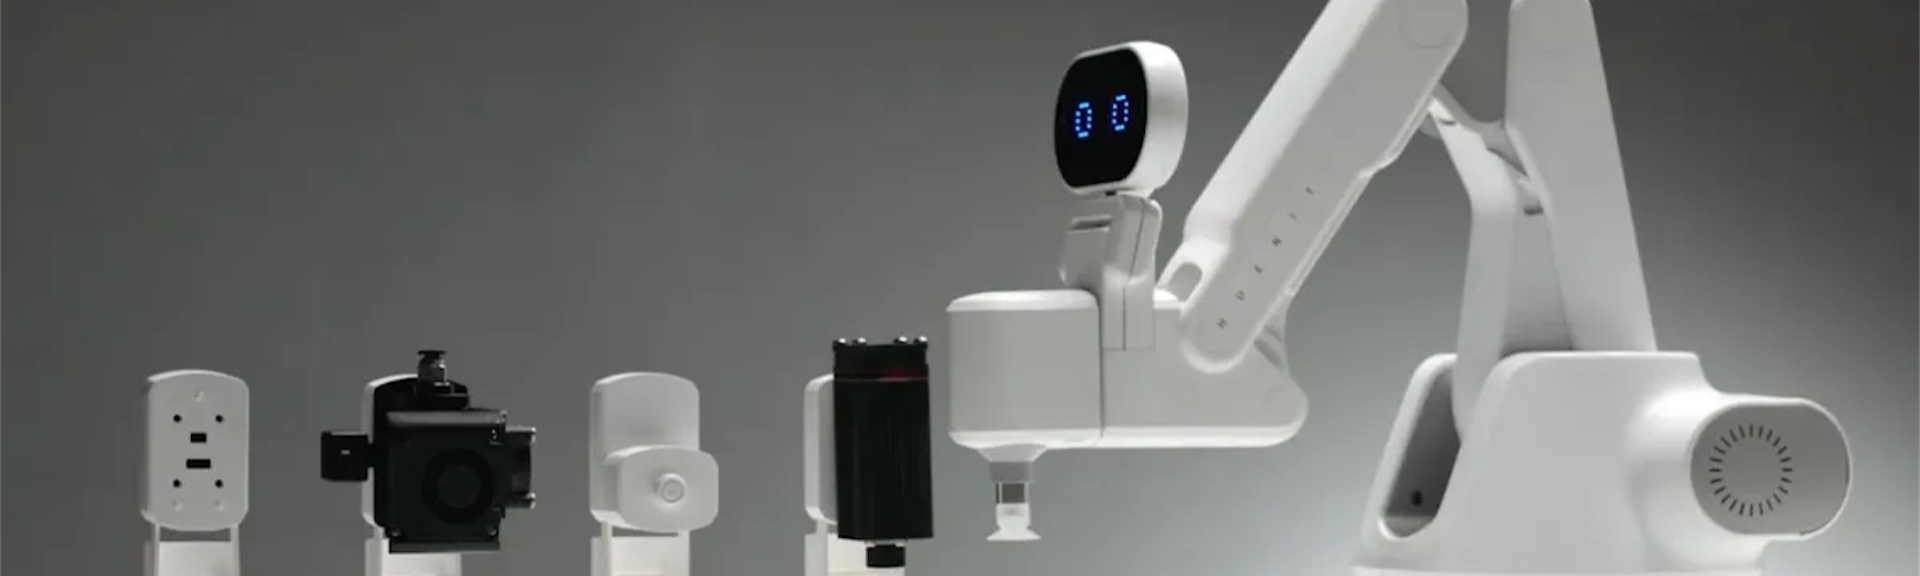 huenit-robotic-arm-christan-kromme-speaker-futurist